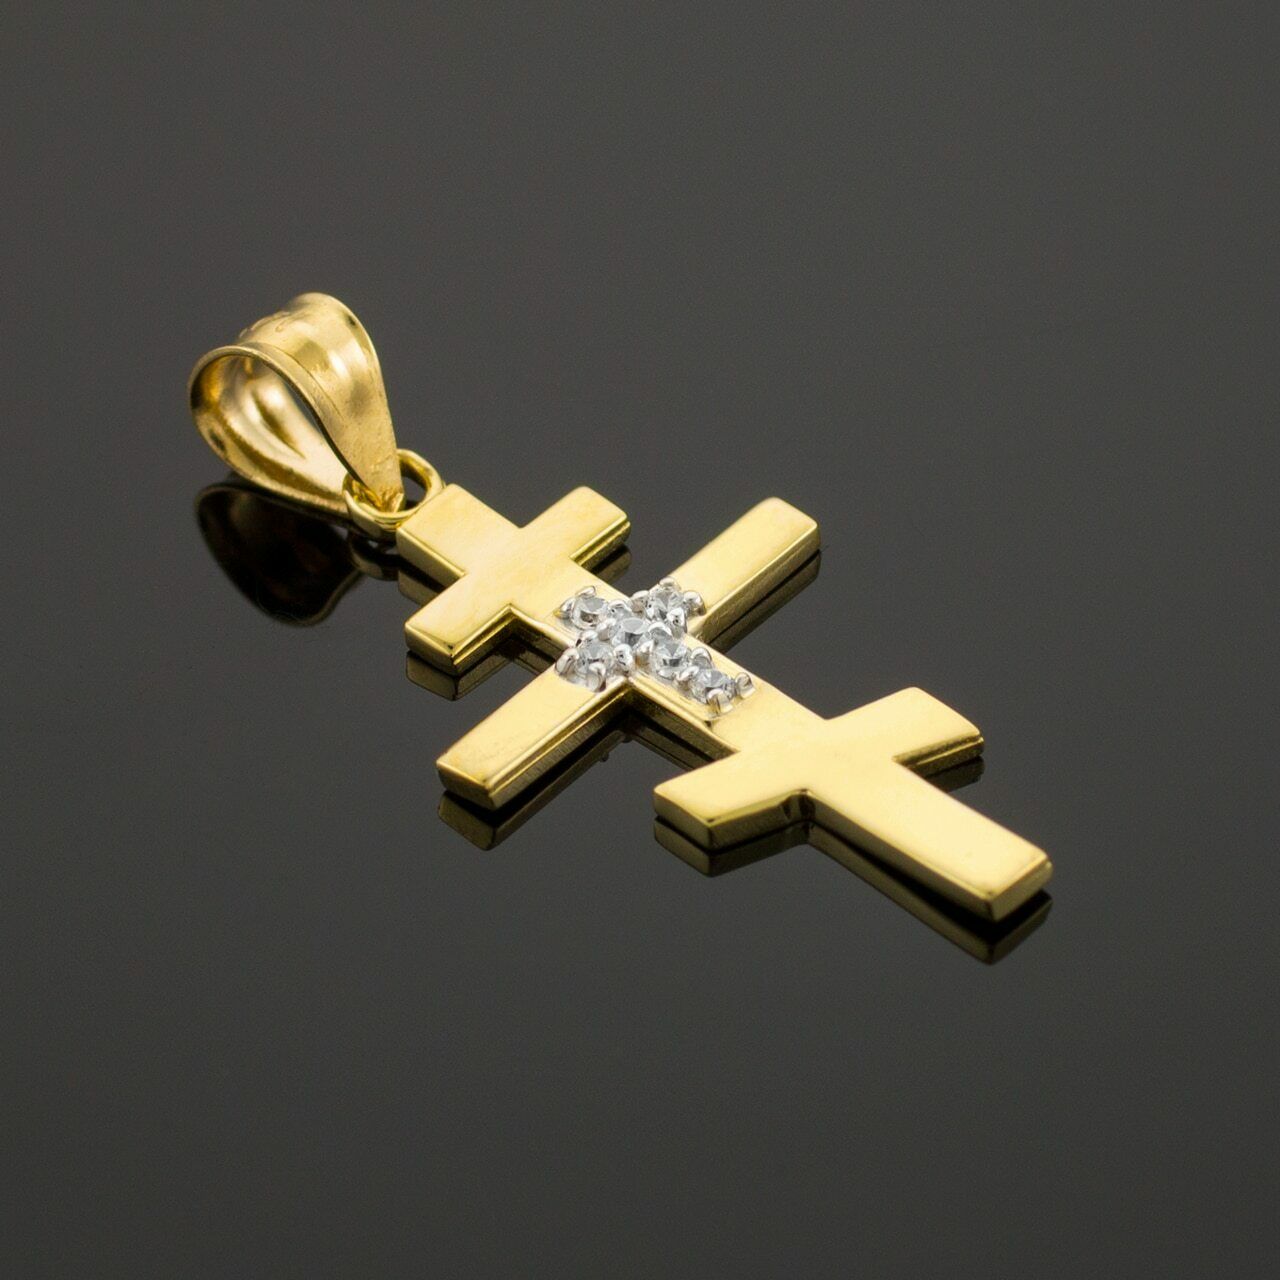 10k Real Yellow Gold Diamond Studded Russian Orthodox Cross Pendant Necklace